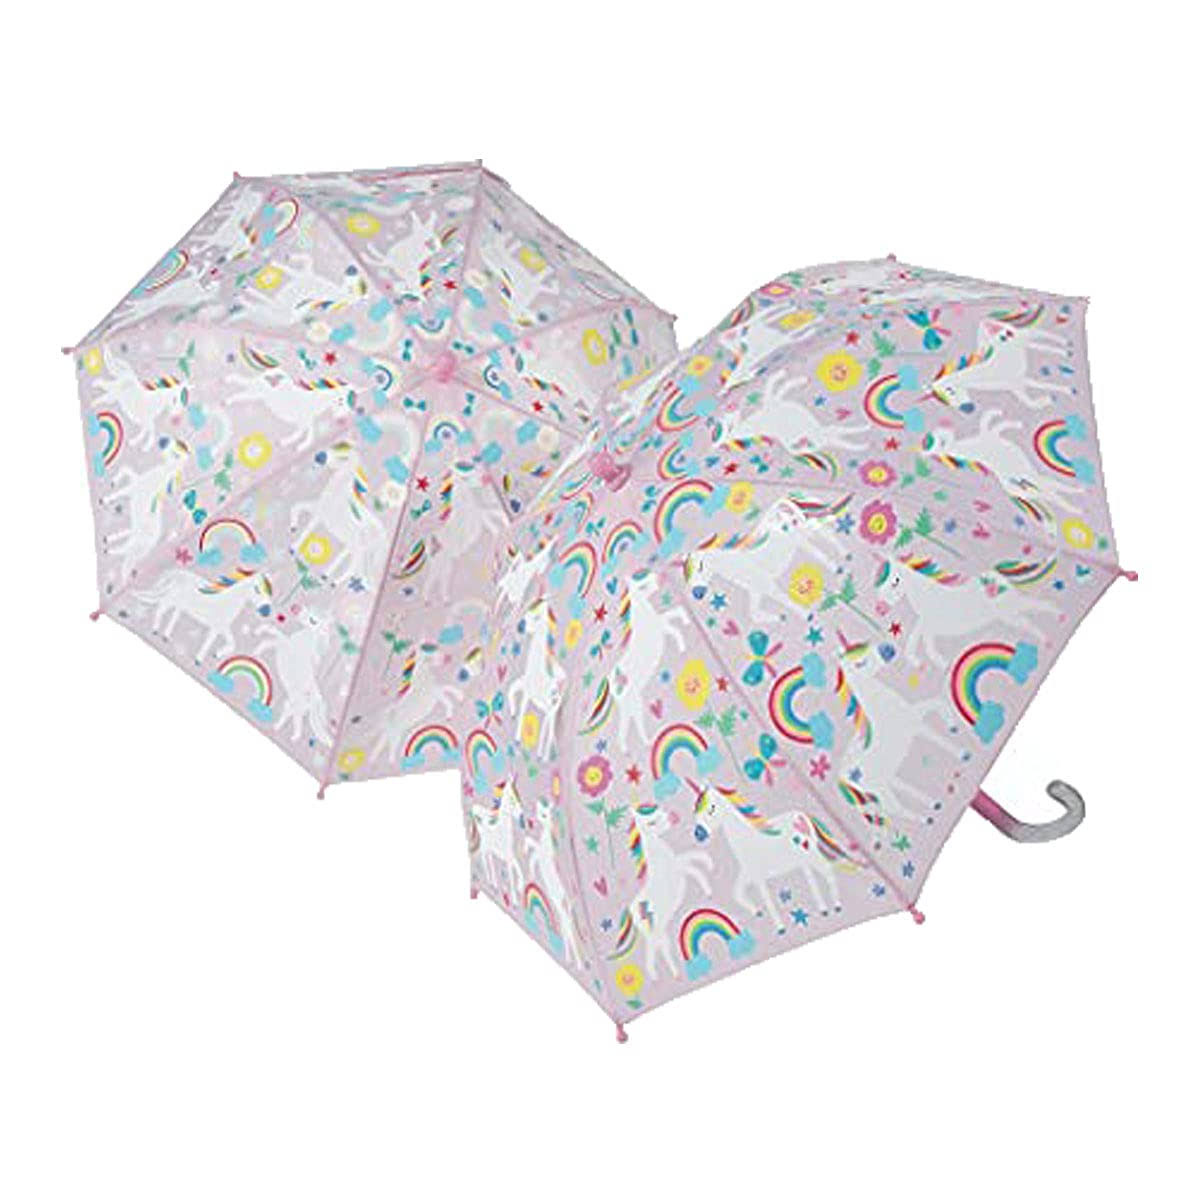 Floss & Rock Colour Changing Umbrella - Rainbow Unicorn